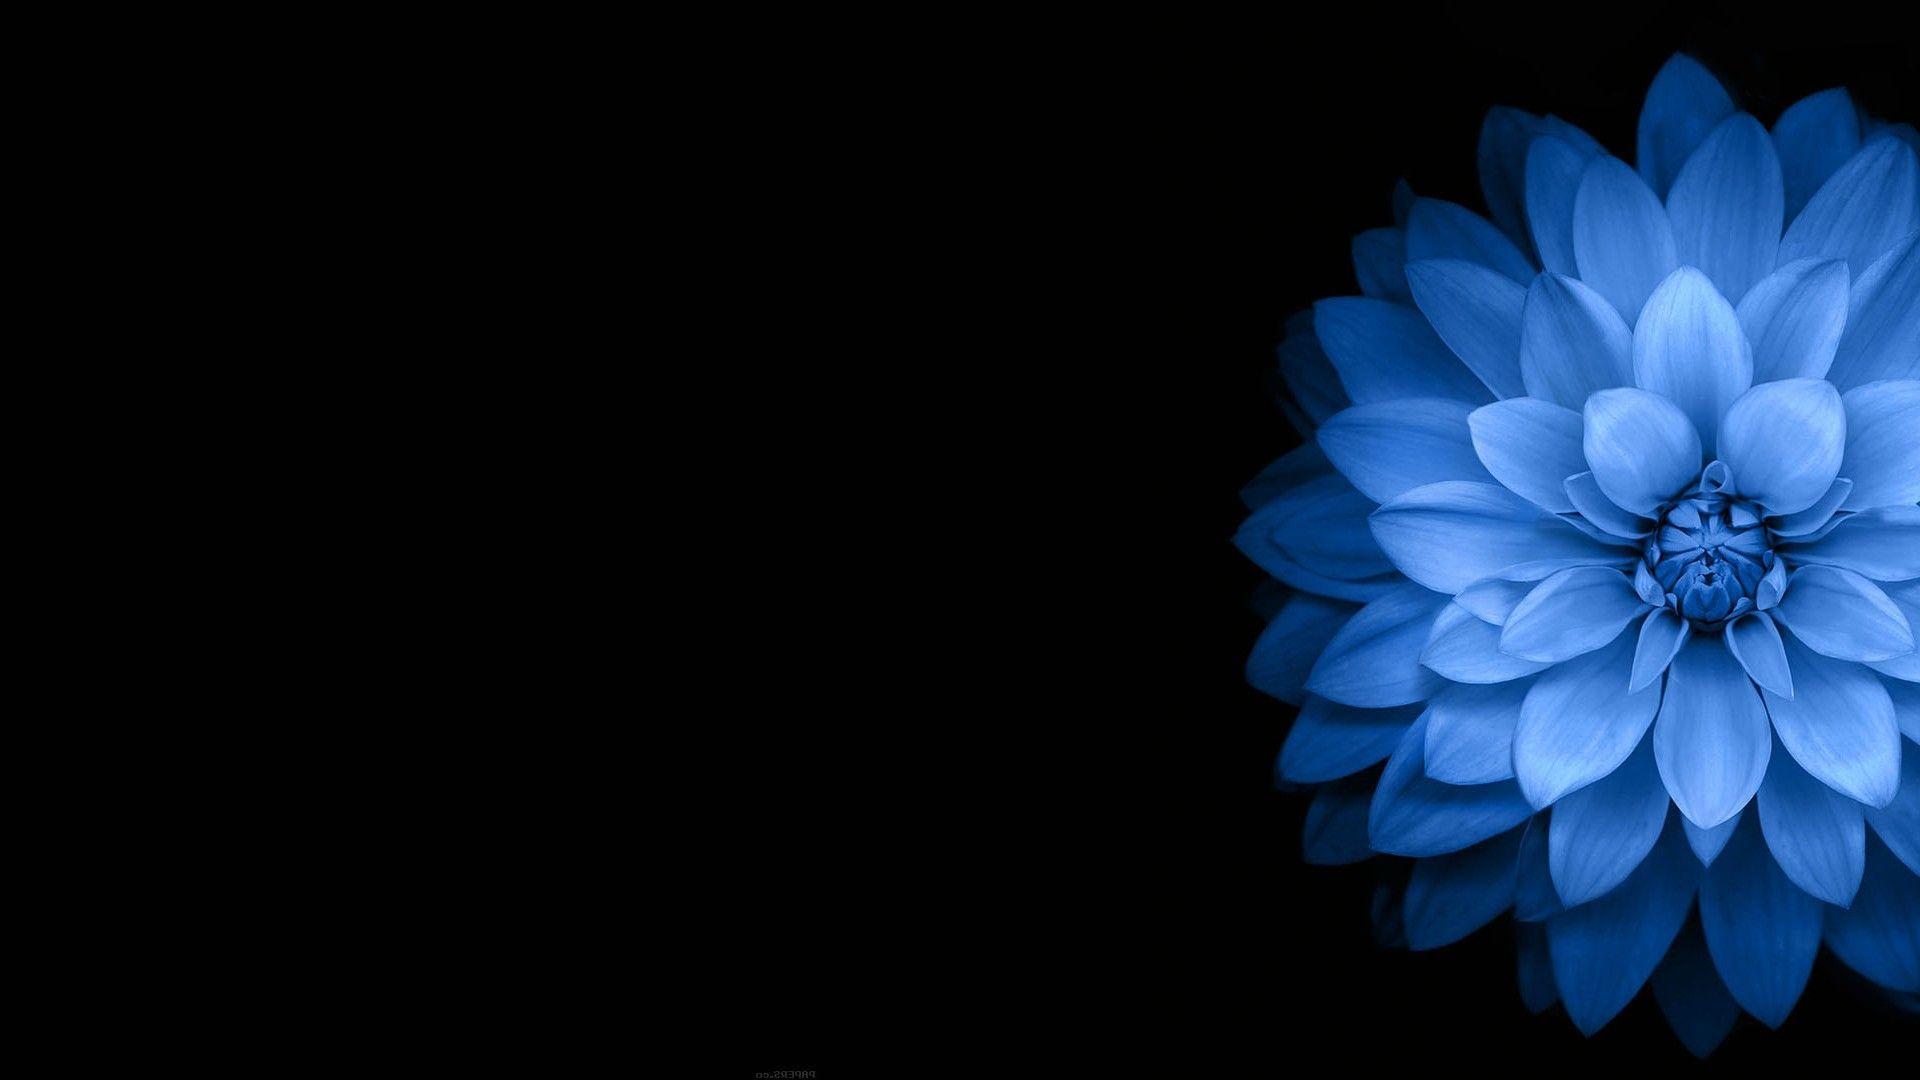 Dark Flower Wallpaper High Quality Flowers Blue Black HD Desktop